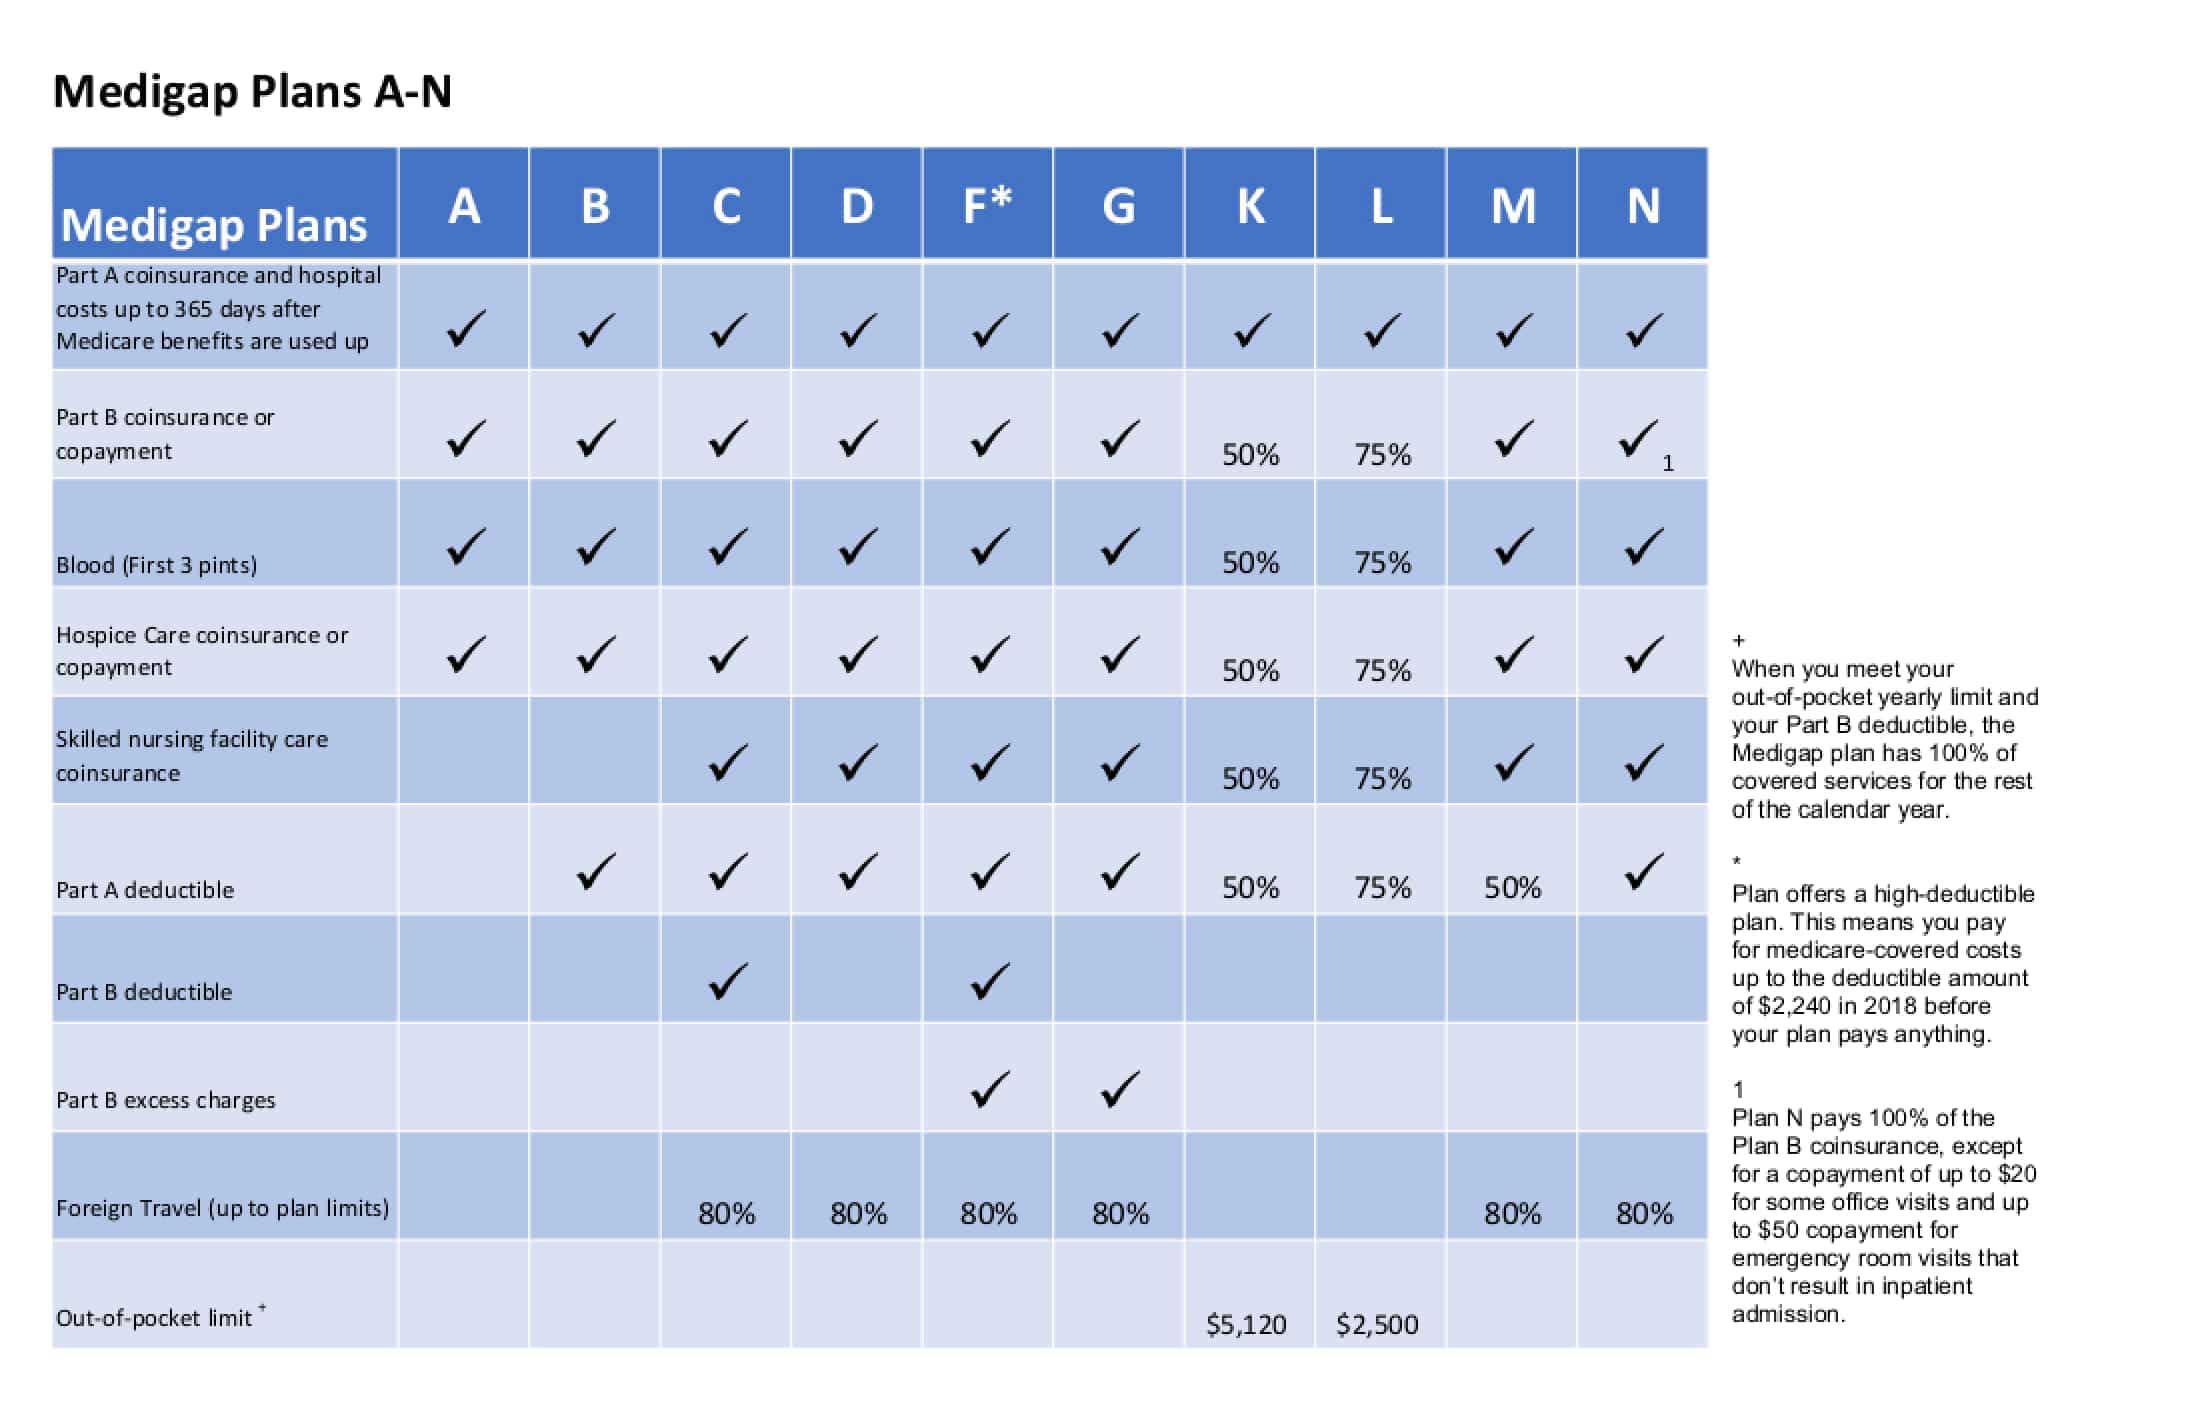 Medicare Drug Plans Comparison Chart